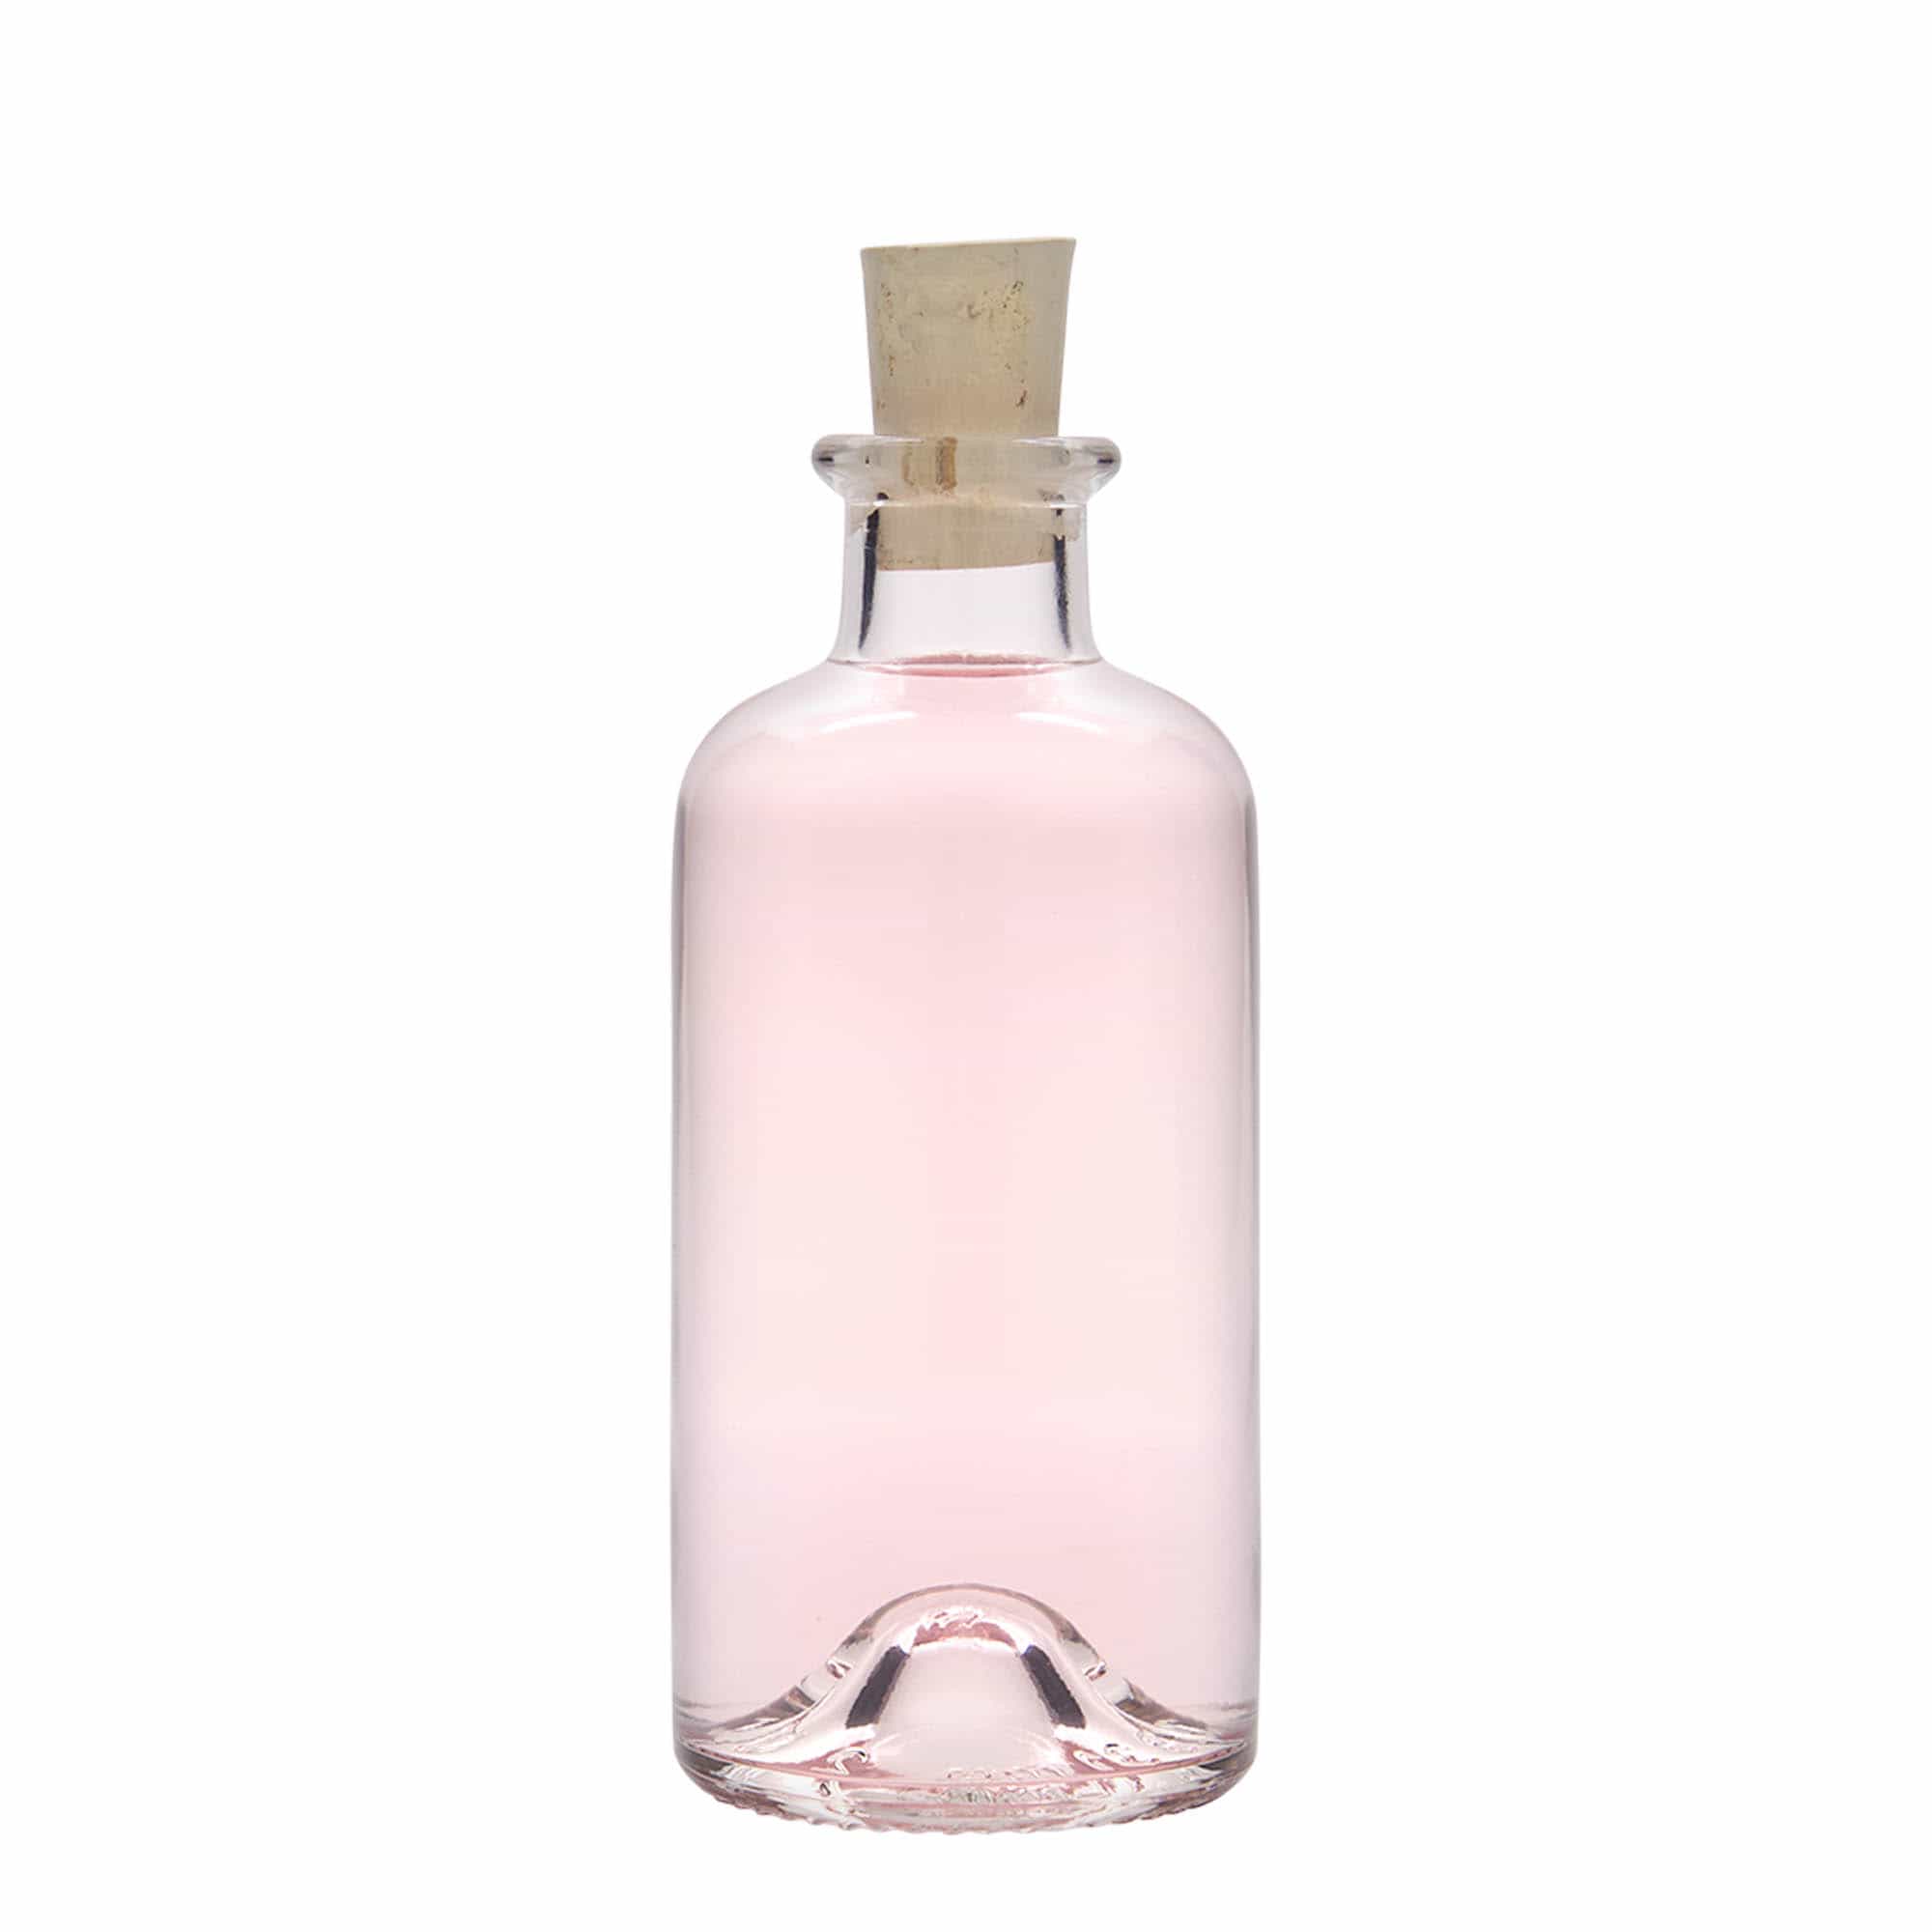 200 ml glass apothecary bottle, closure: cork